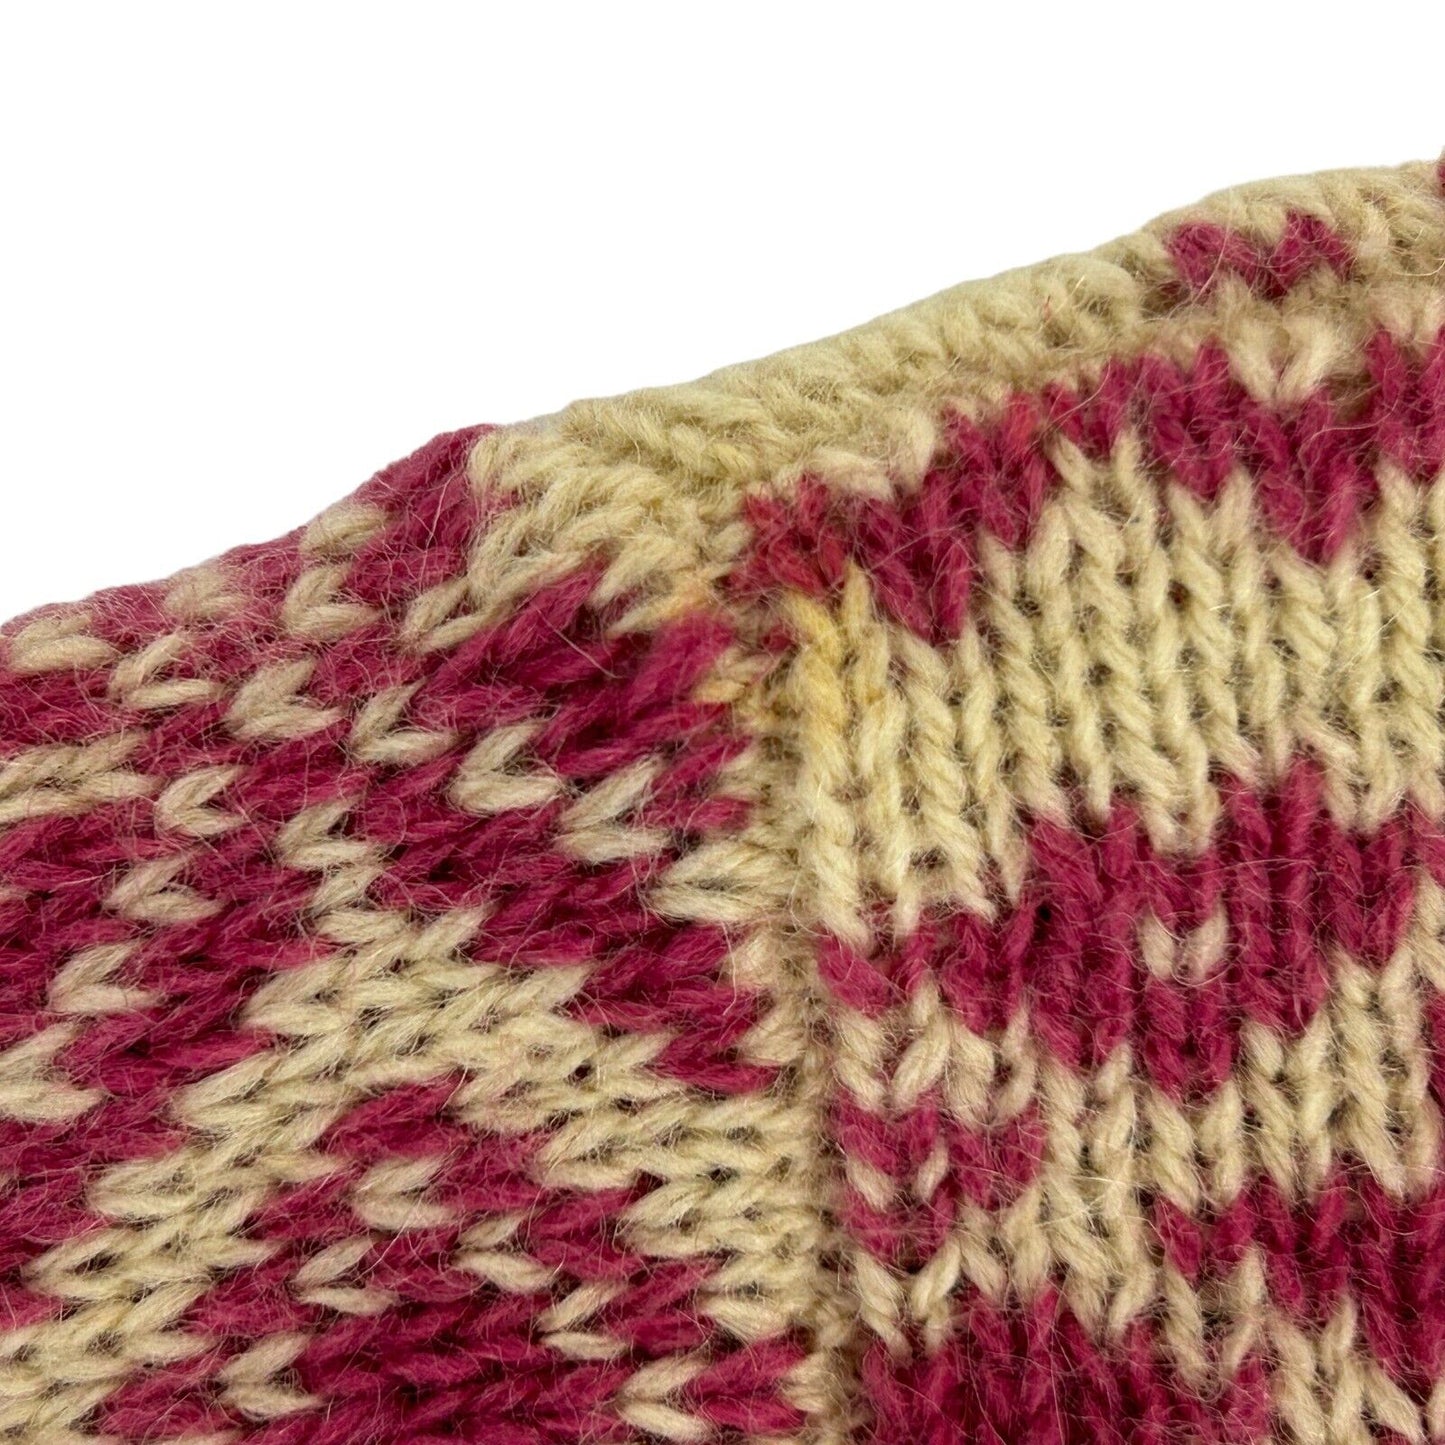 Woolrich Woman Womens Wool Sweater Medium Vintage 80s Floral Flower 9558 Pink